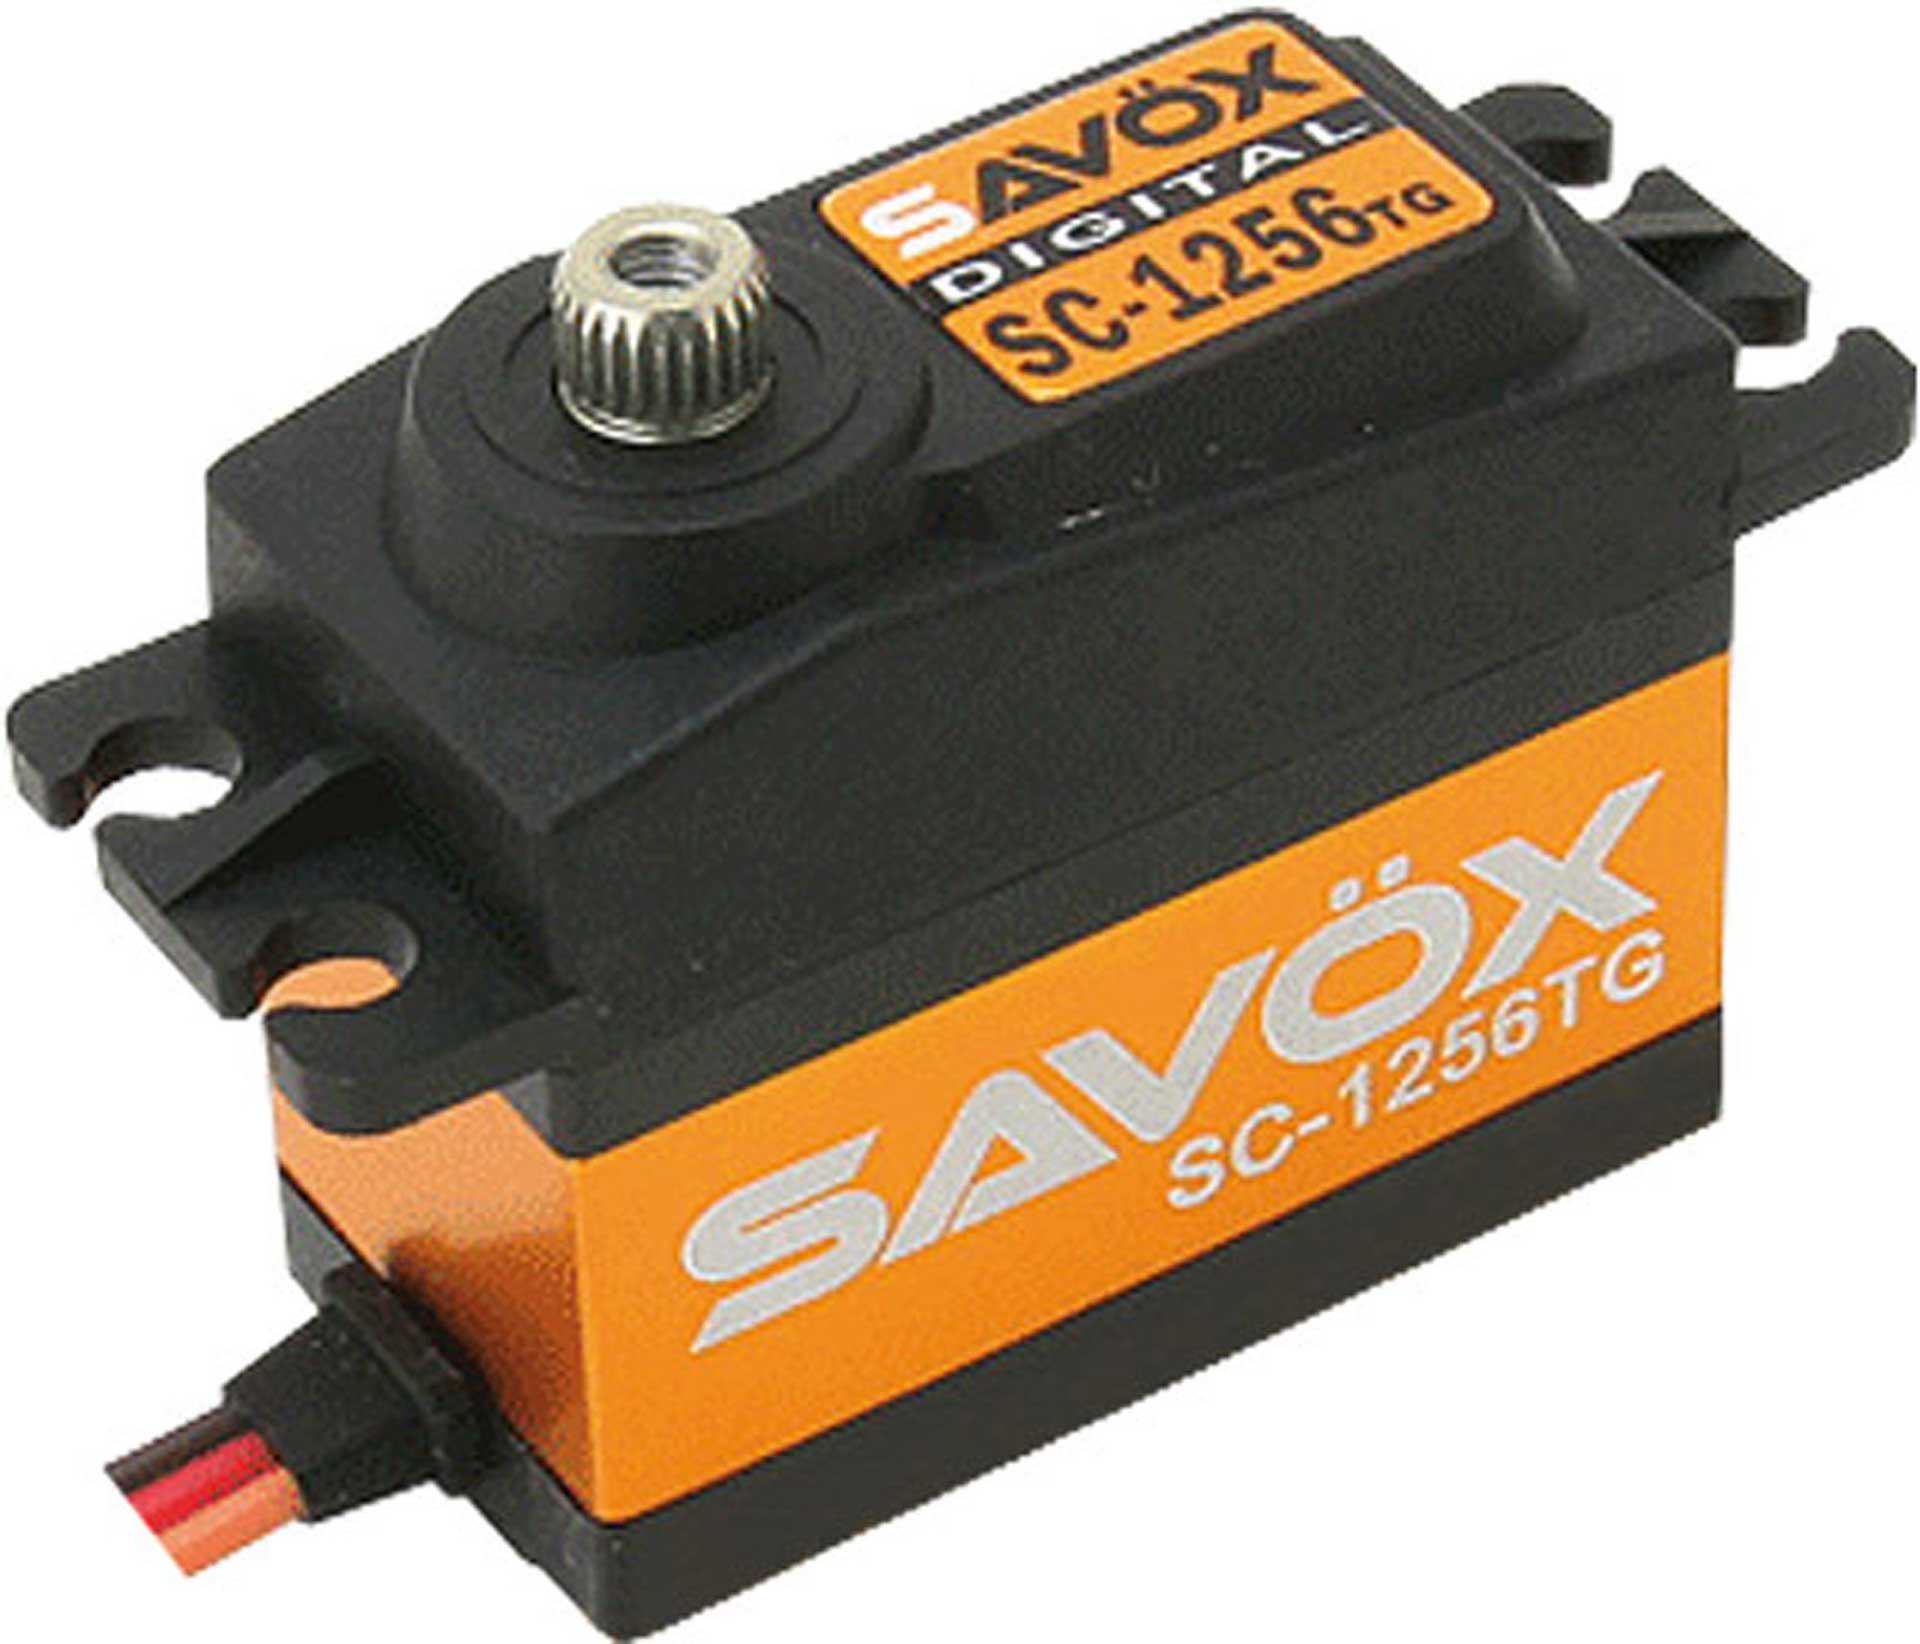 SAVÖX SC-1256TG (6V/20KG/0,15s) DIGITAL SERVO